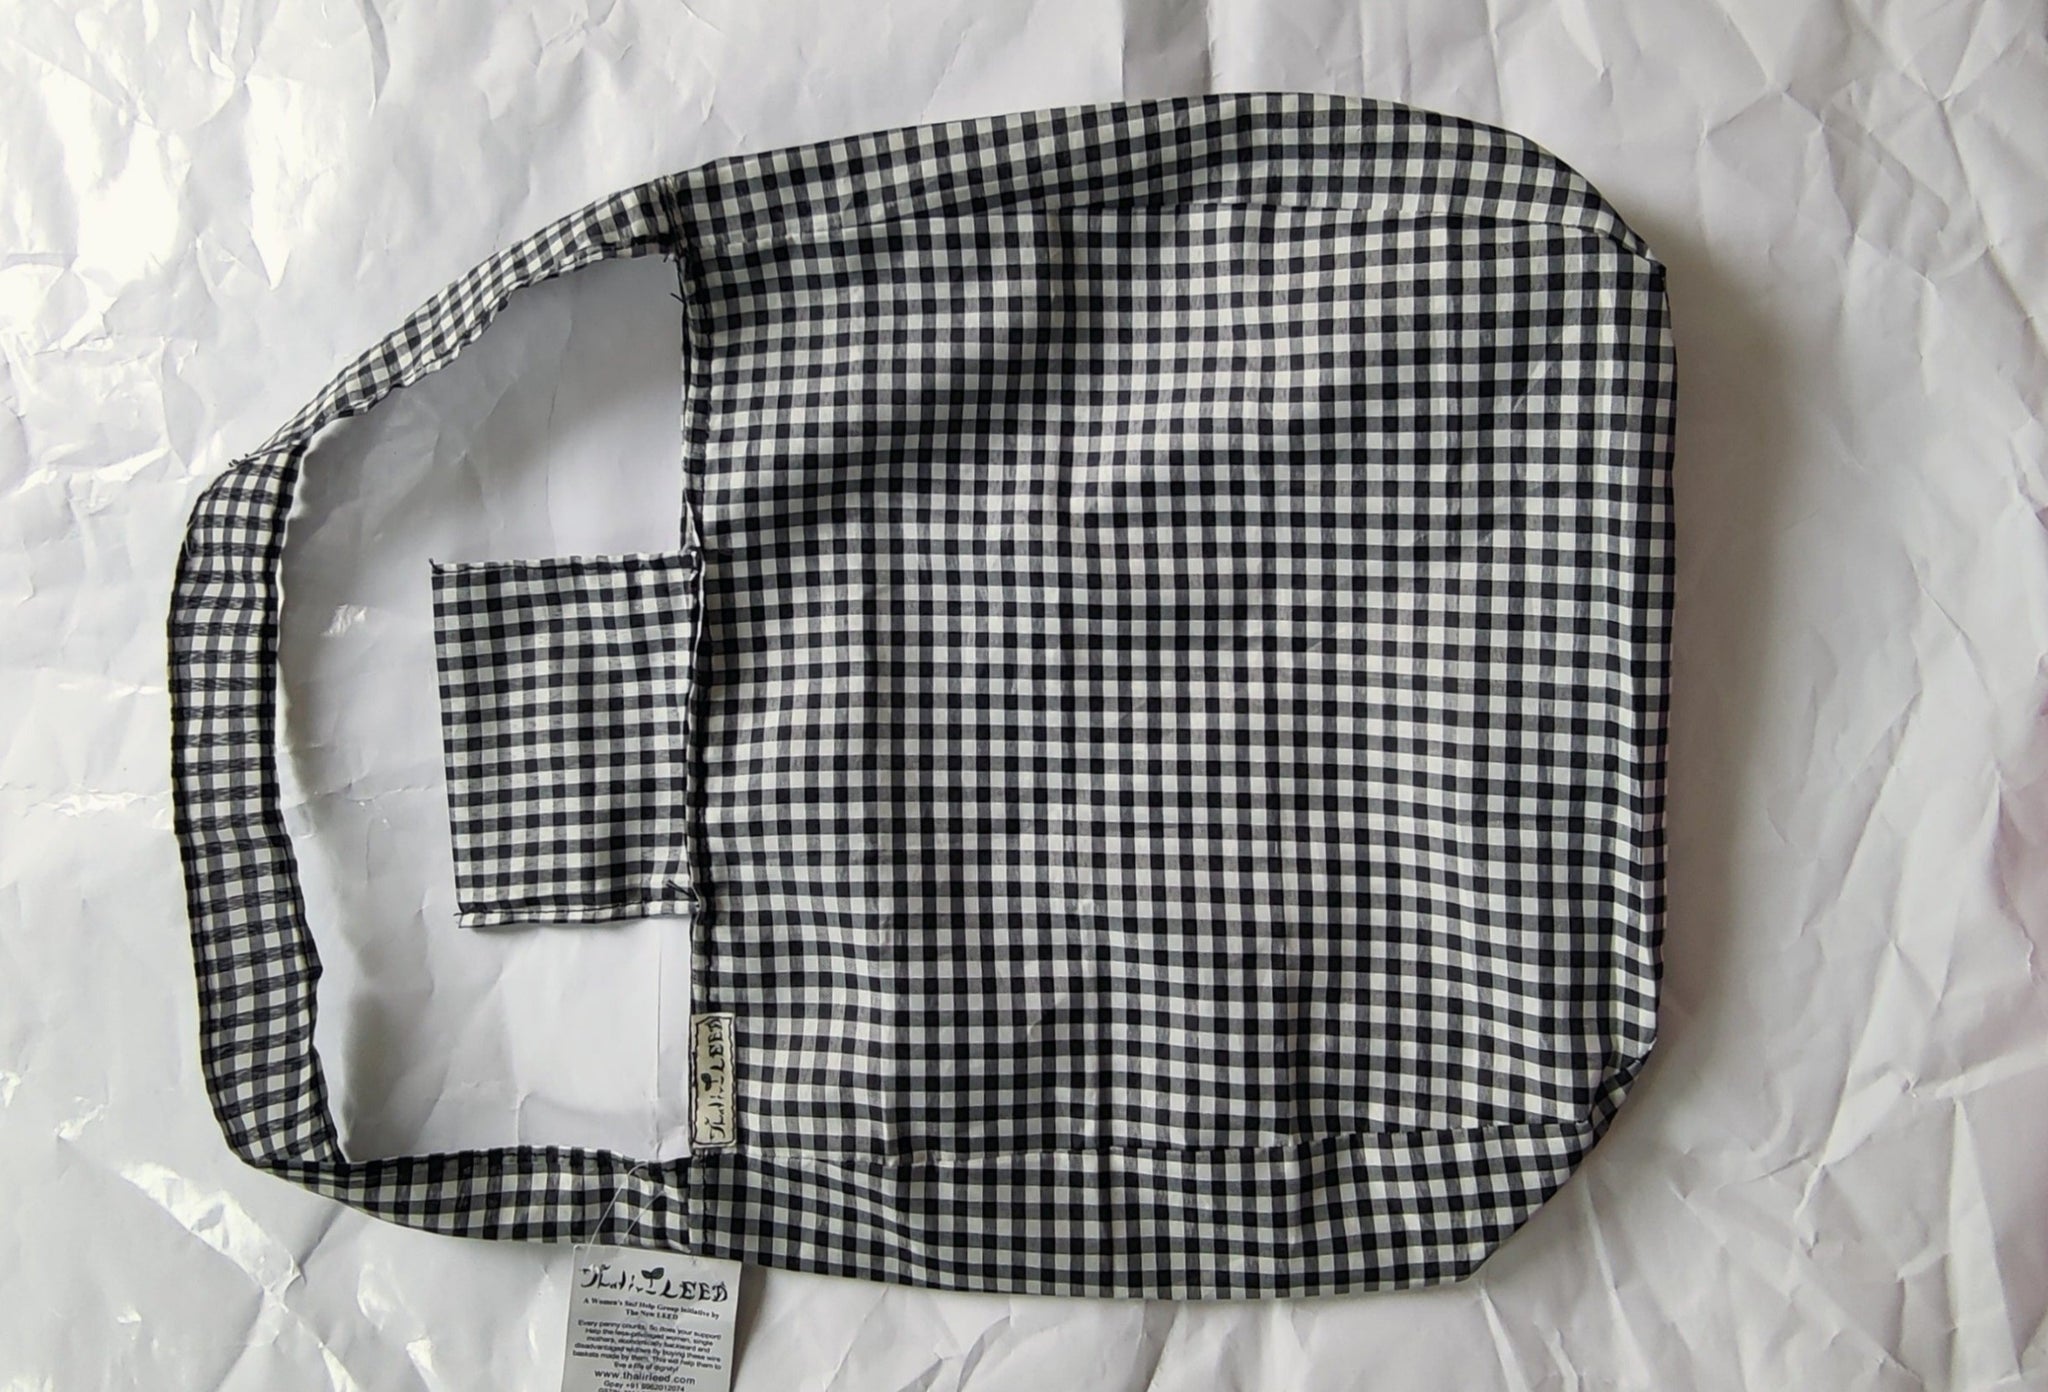 TLCB-0021/Foldable, Purse Bag, Fits in Pocket